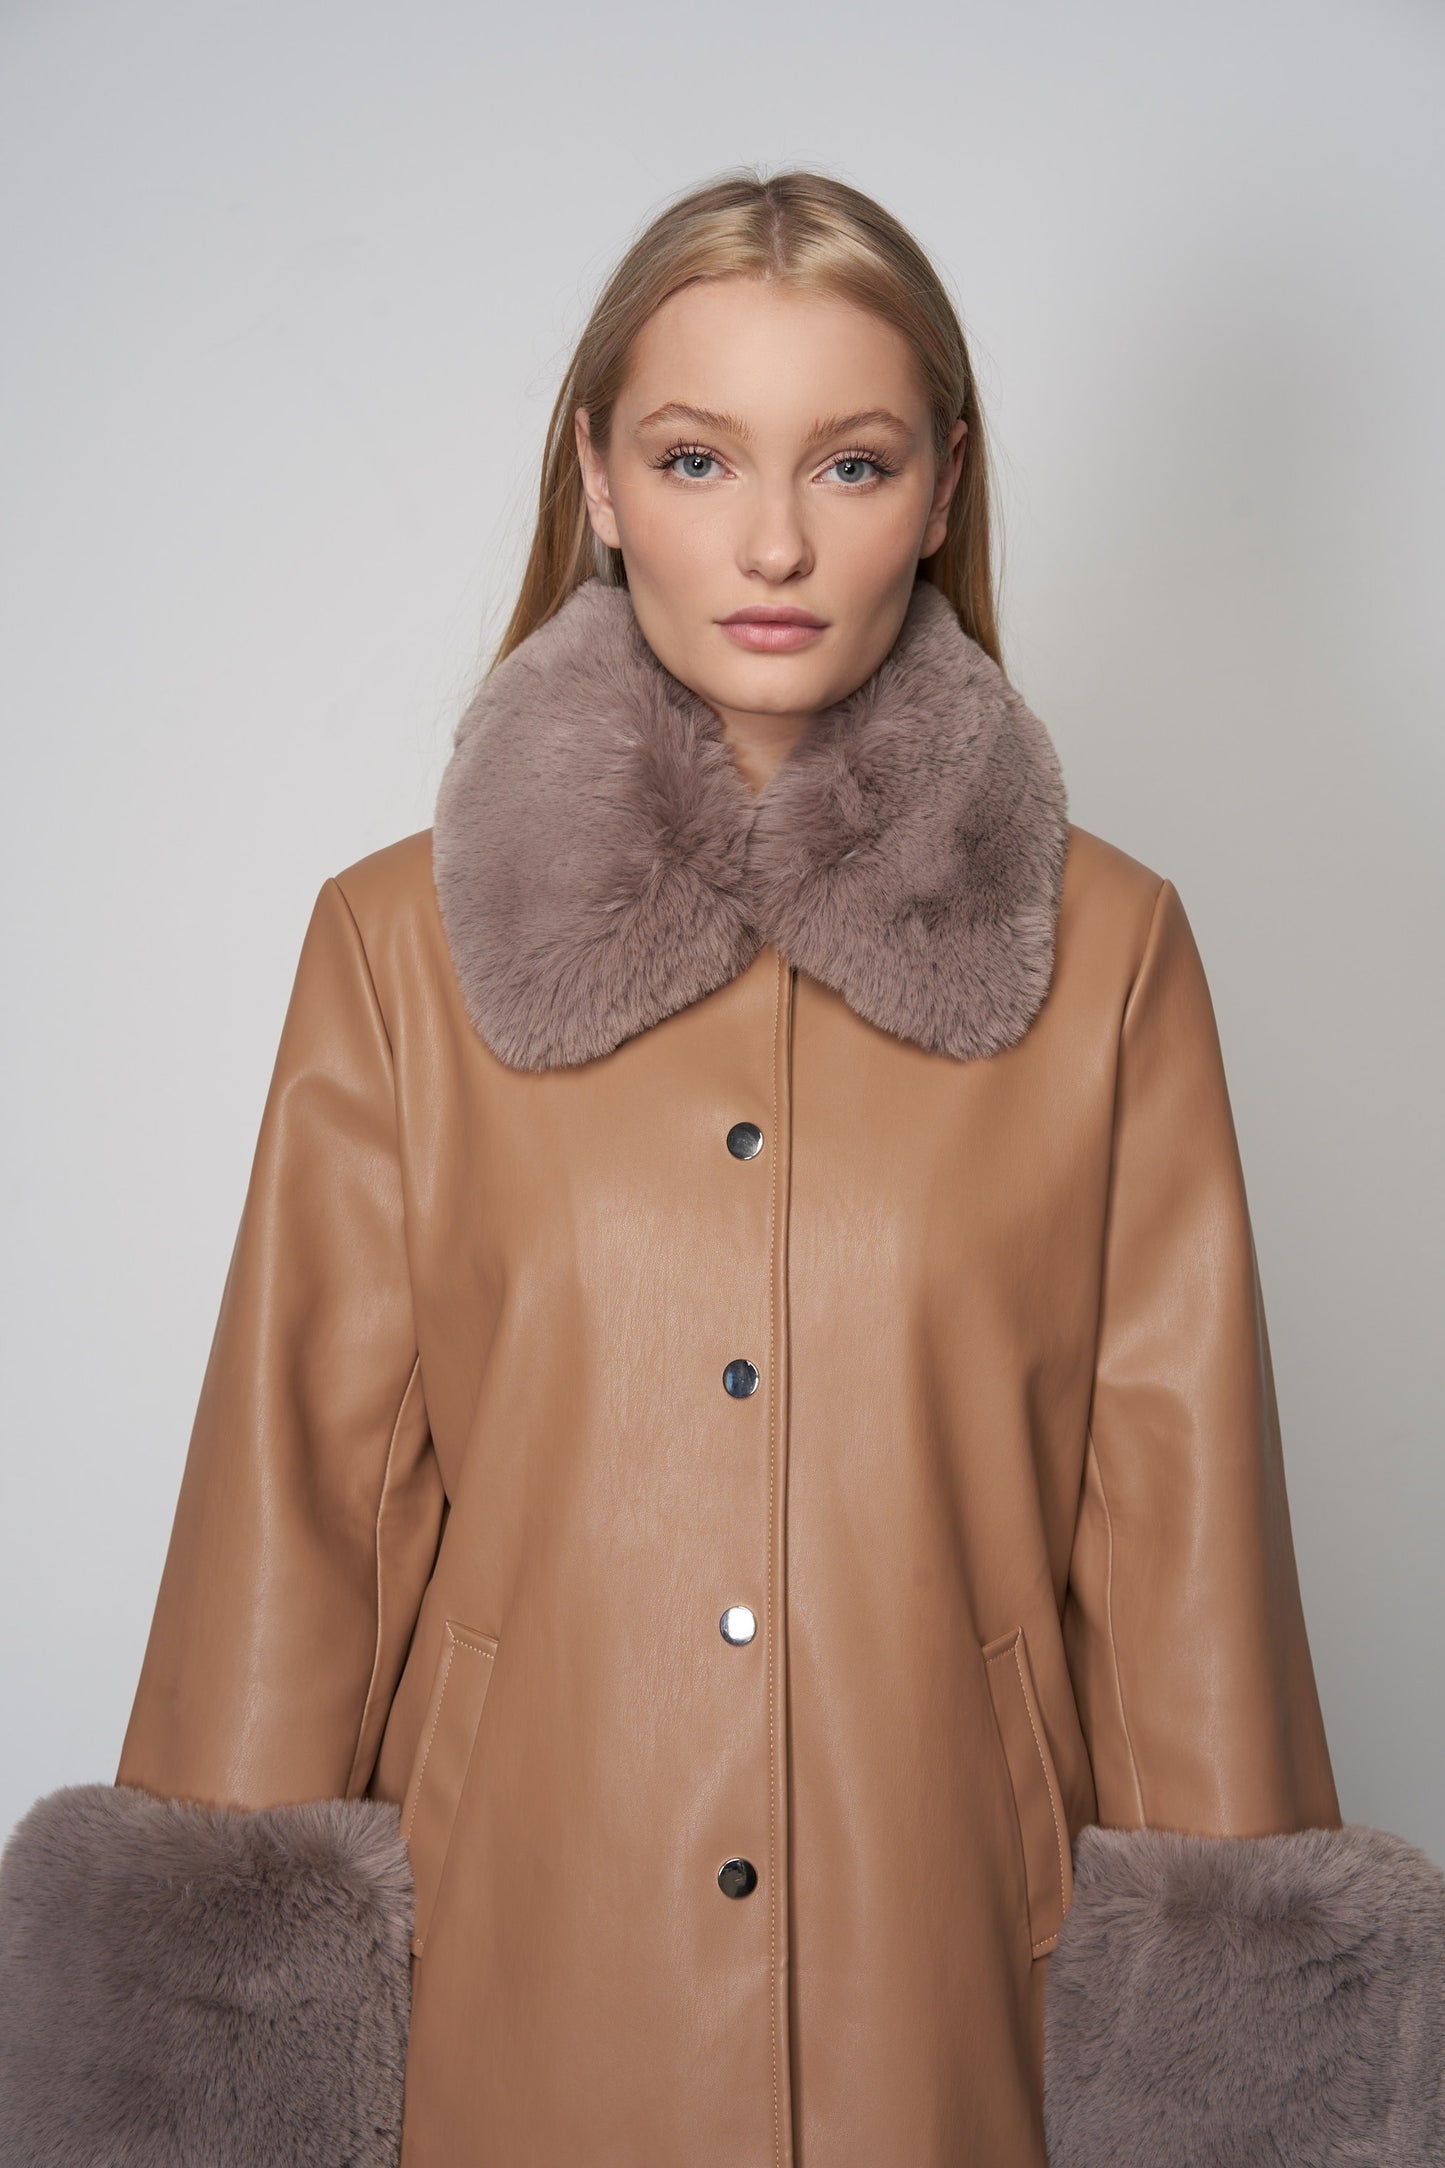 Sarah PU Leather Jacket Long Beige - Sample